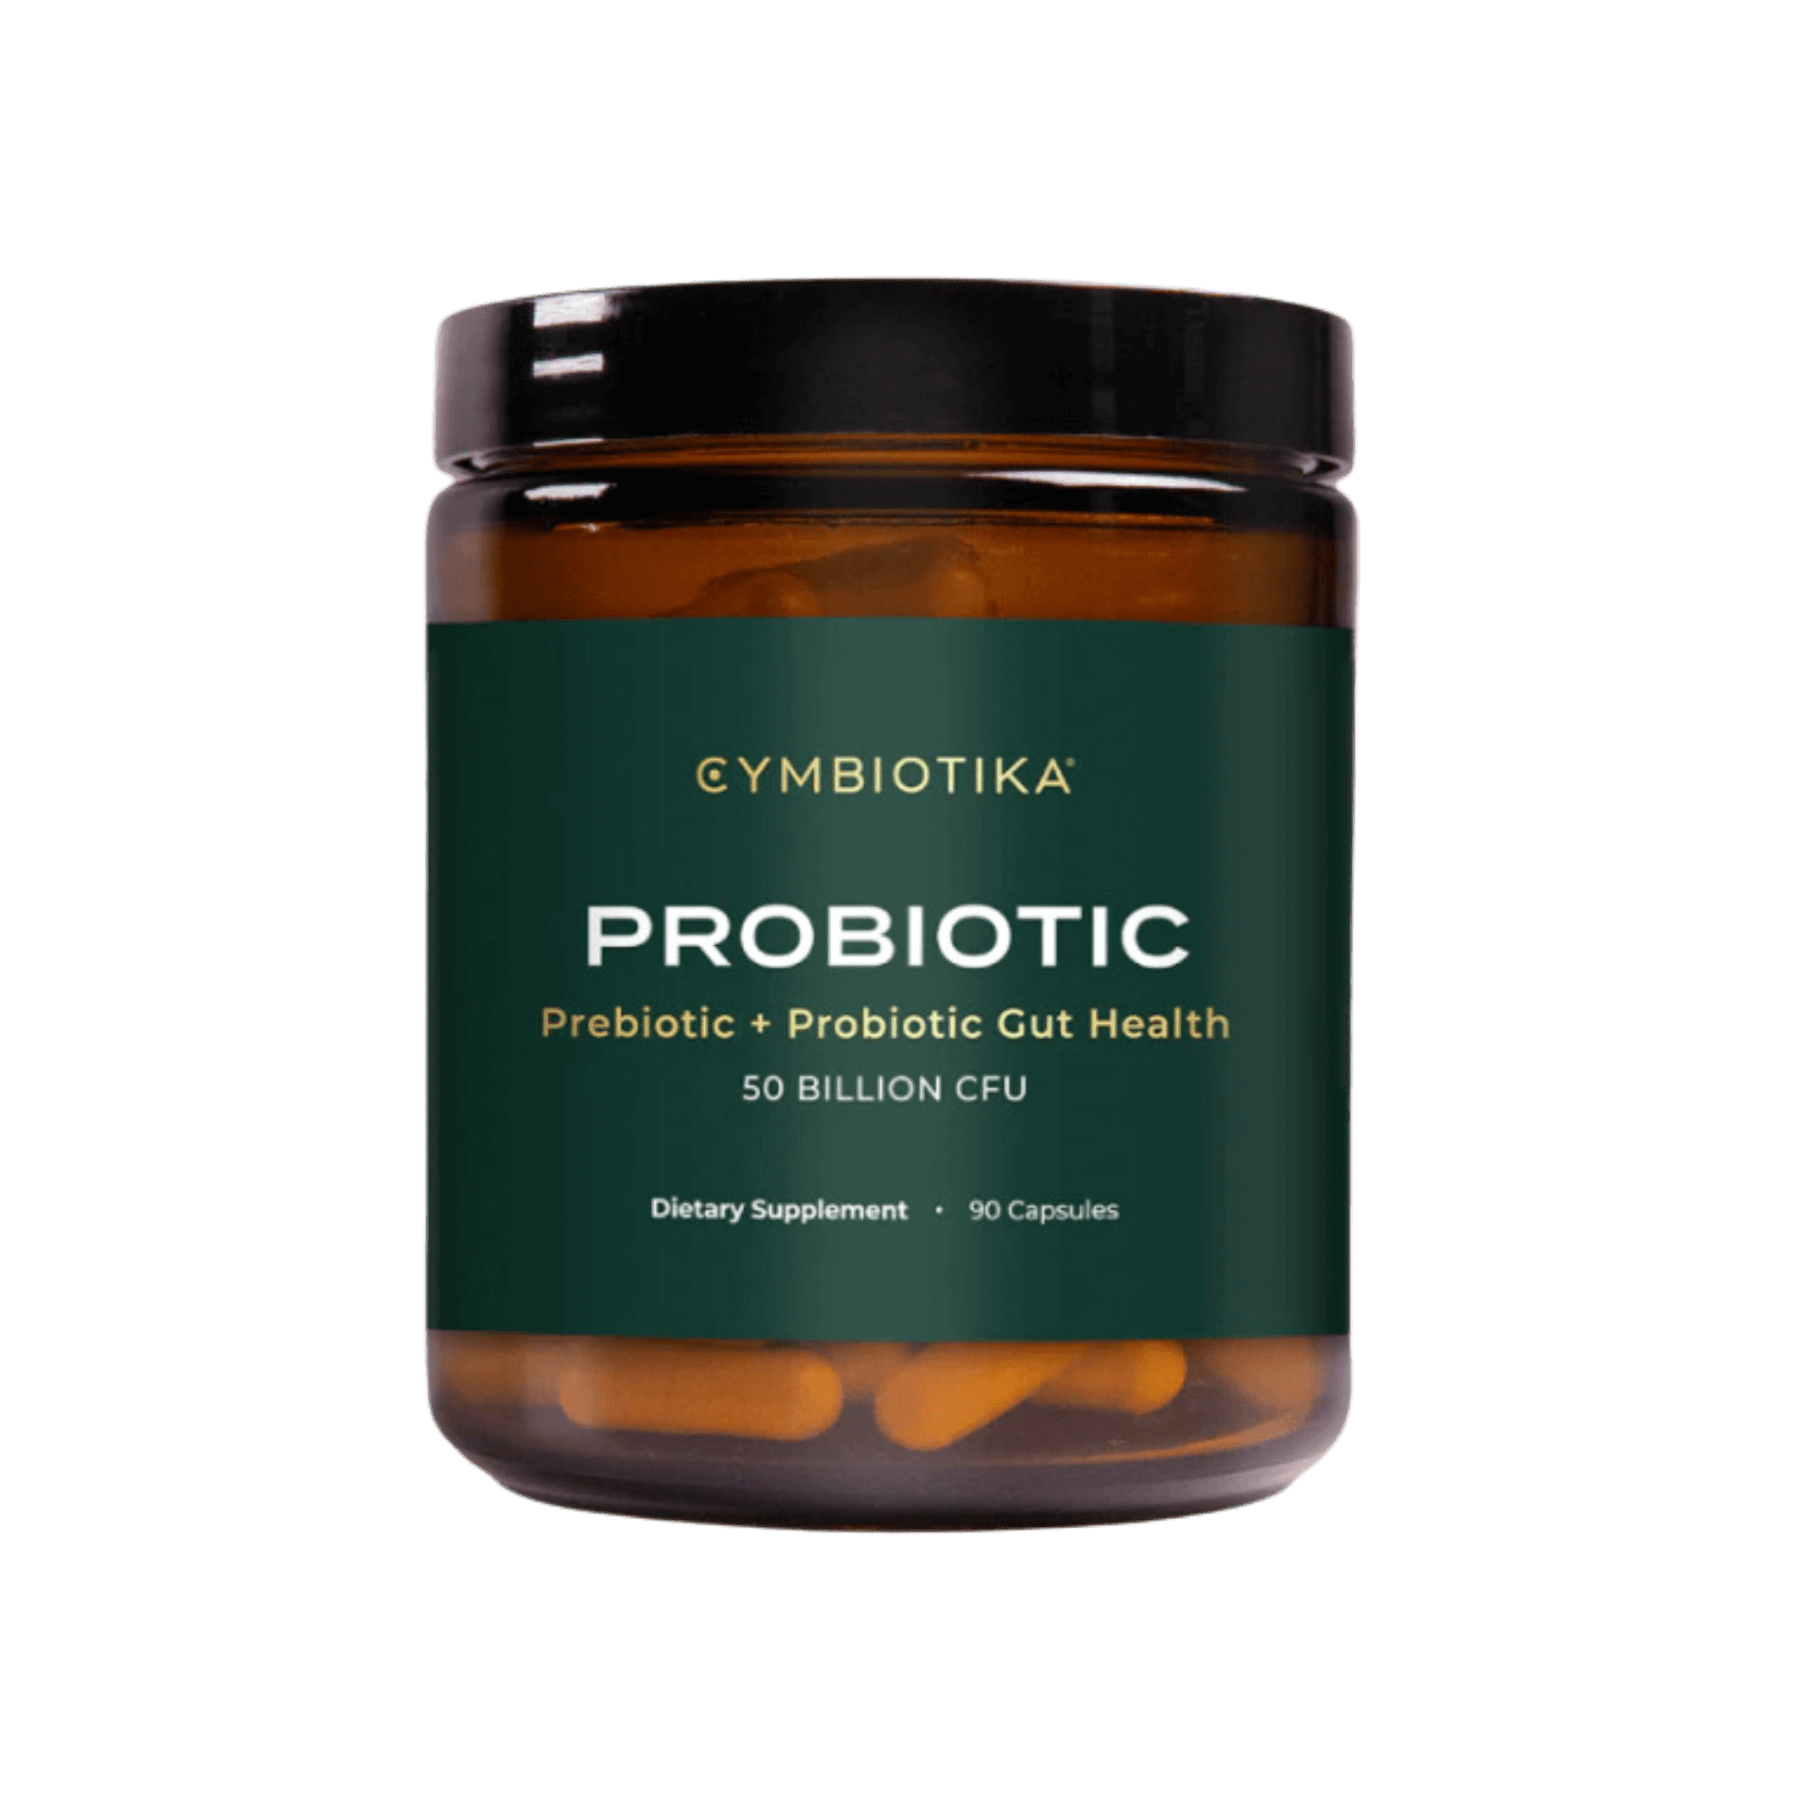 Cymbiotika Probiotic Capsules in amber bottle